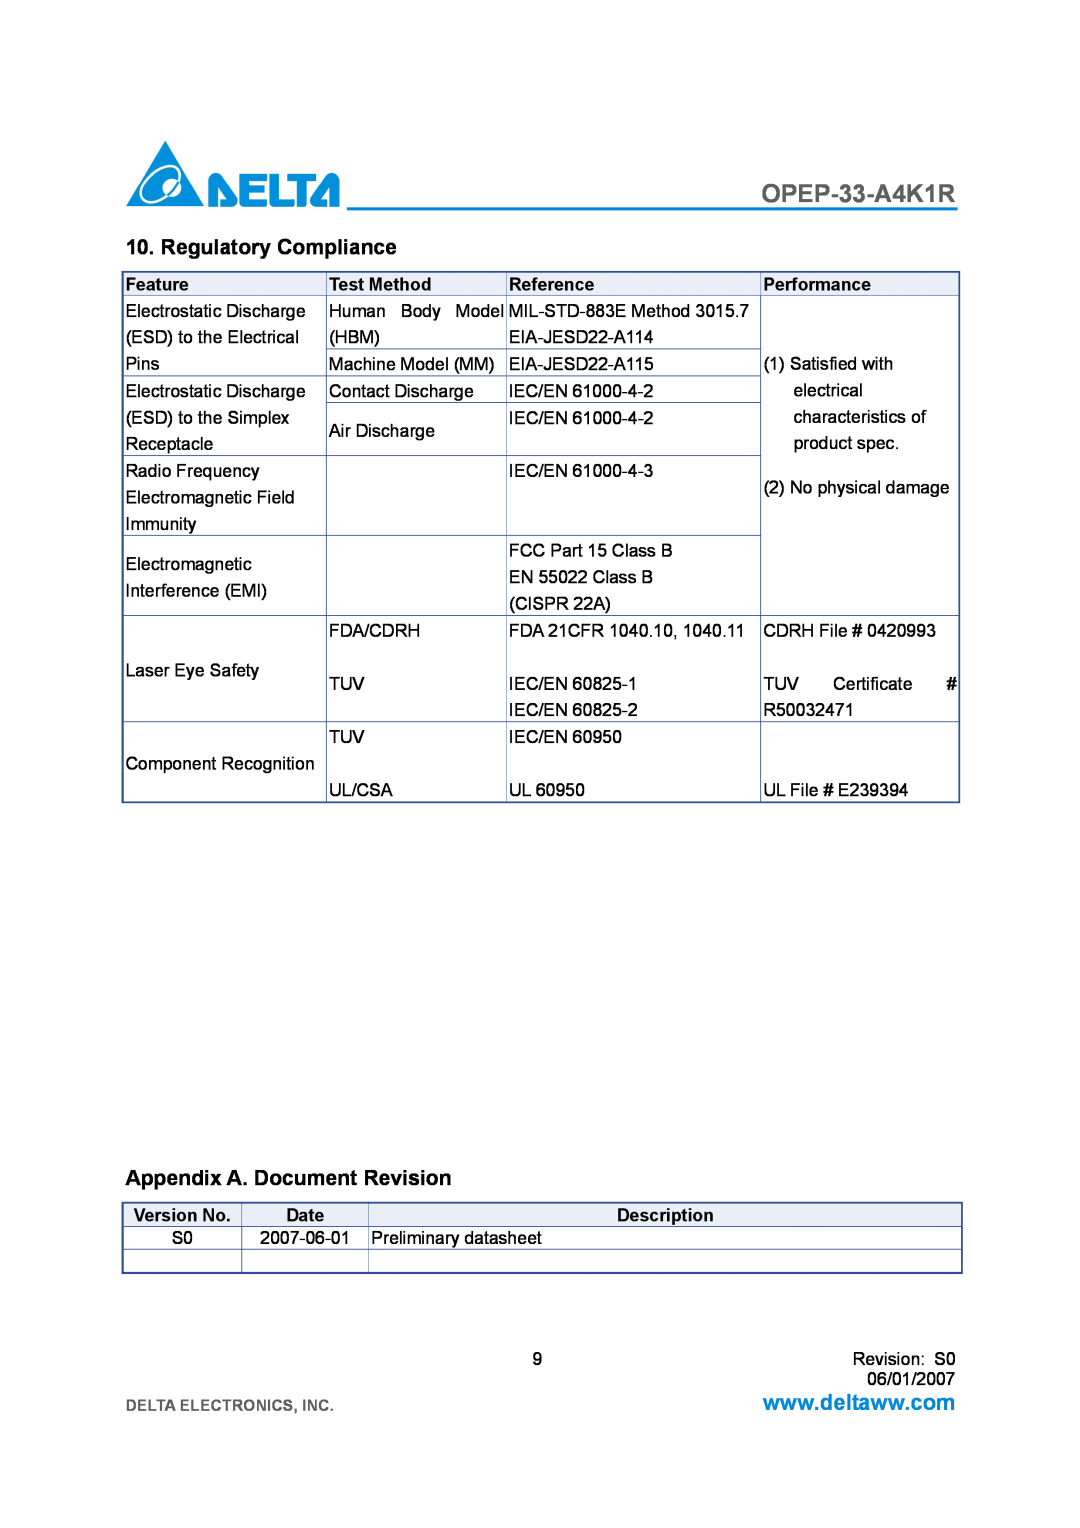 Delta Electronics OPEP-33-A4K1R manual Regulatory Compliance, Appendix A. Document Revision 